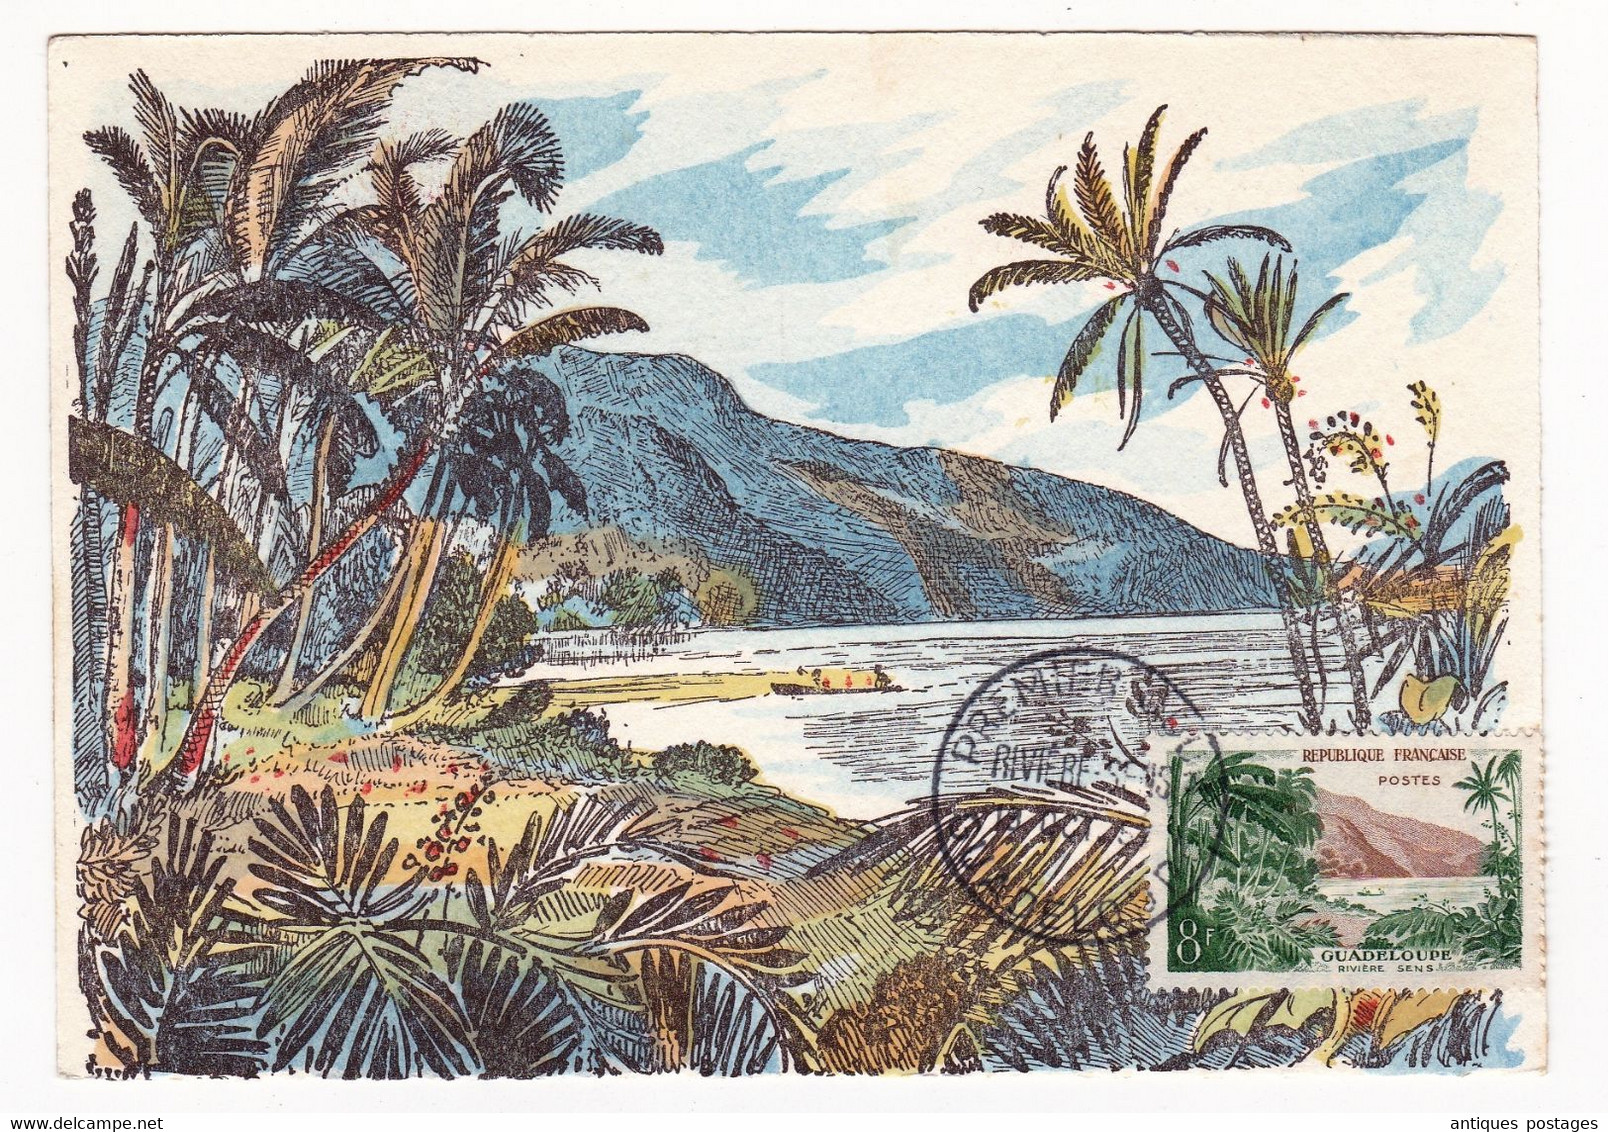 Carte Maximum 1957 Guadeloupe Rivière Sens - Storia Postale